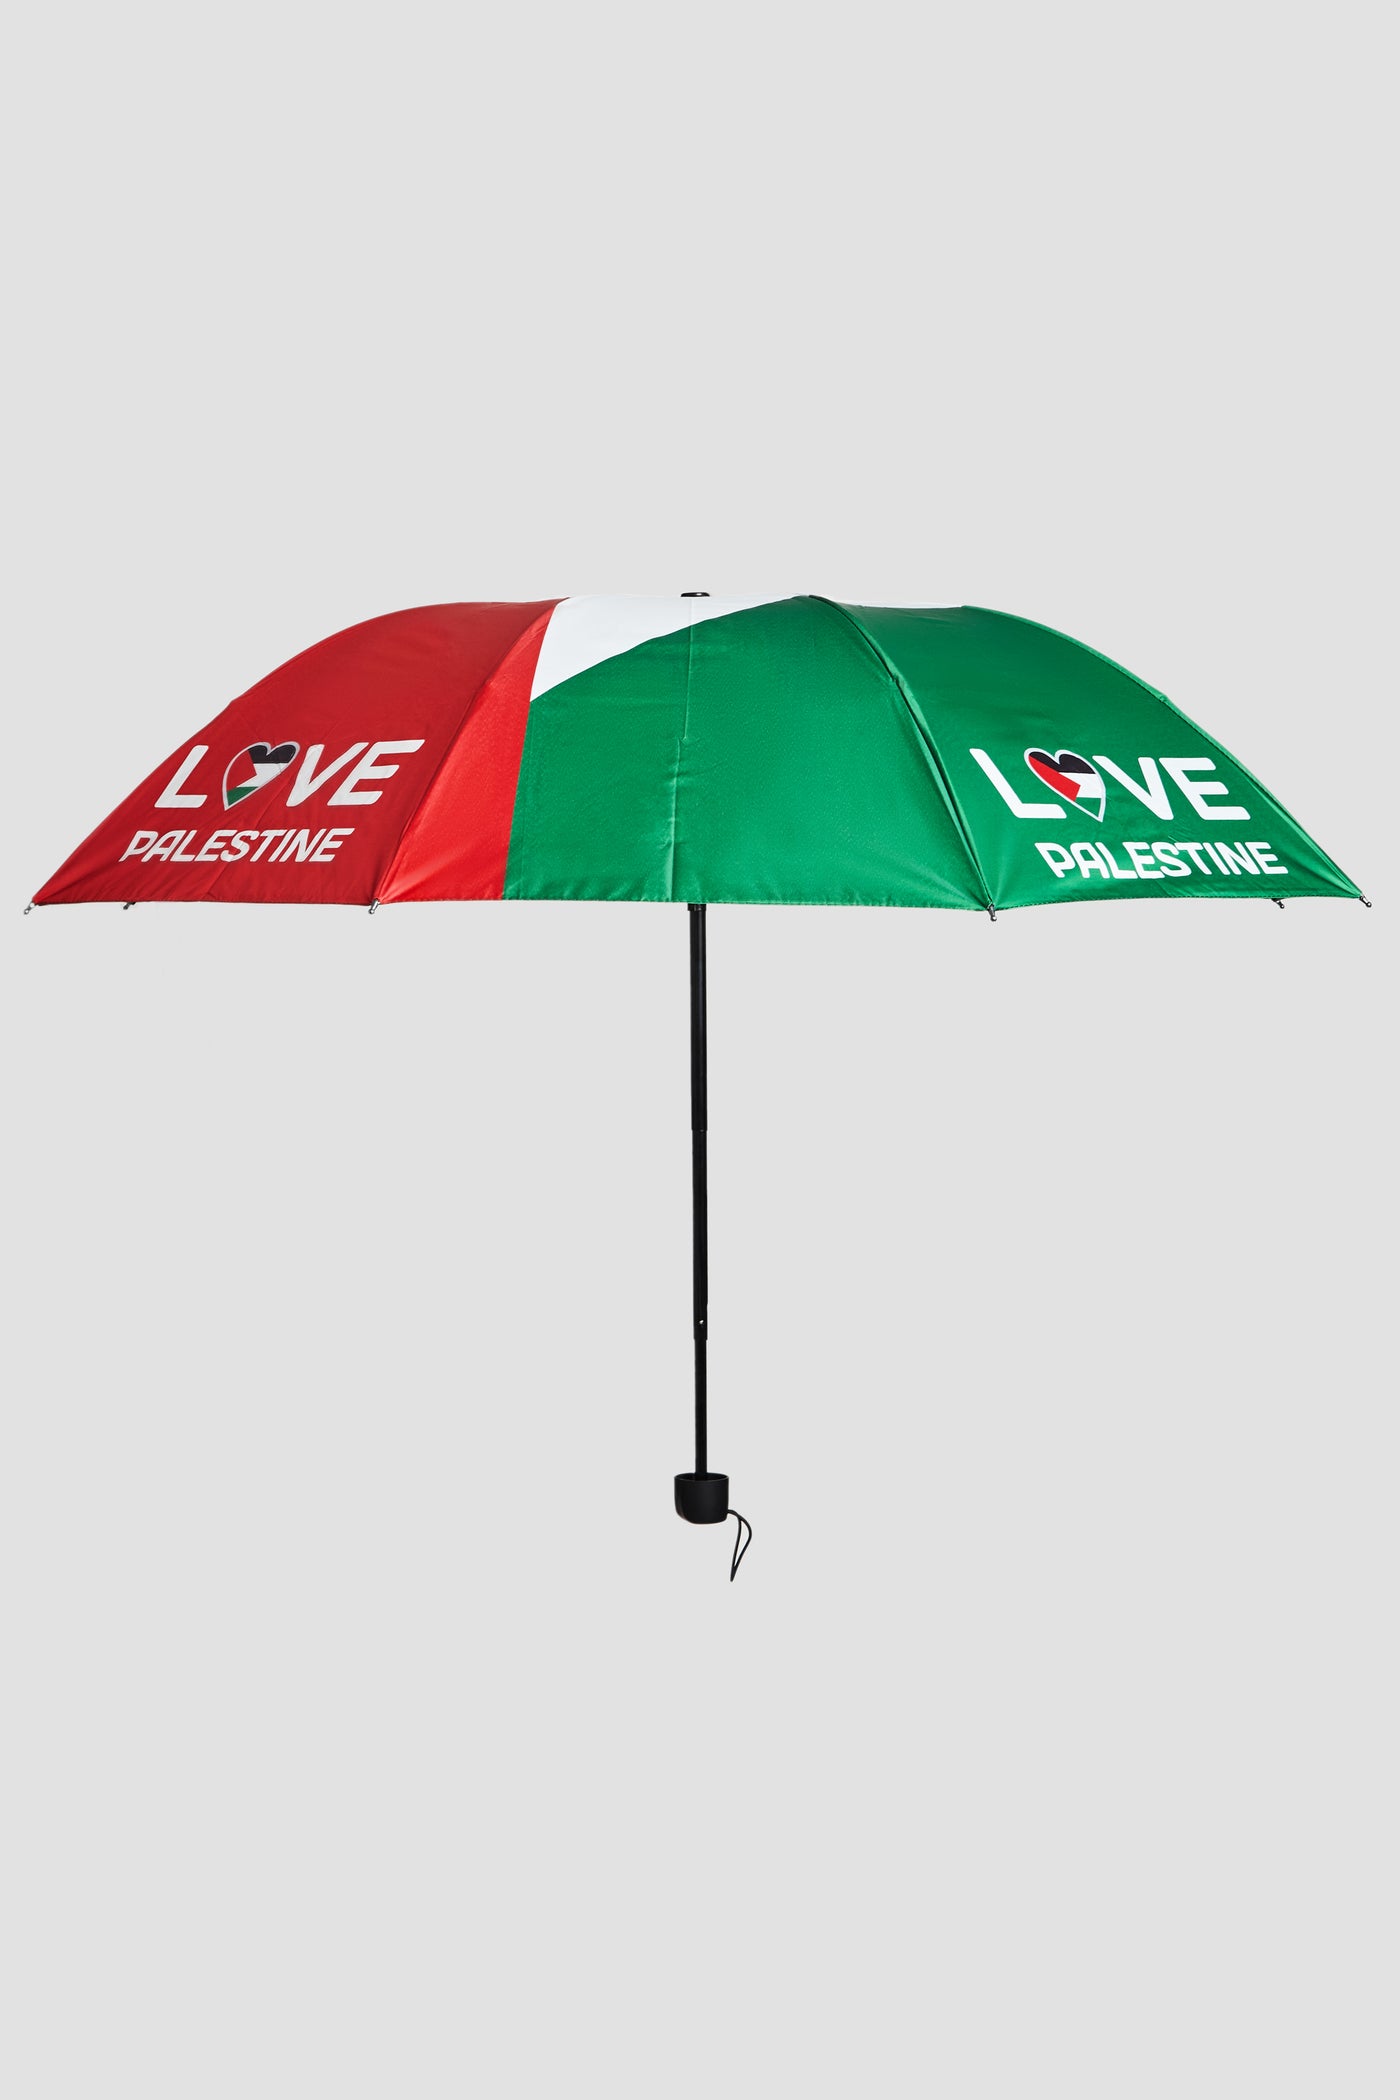 Folding Love Palestine Umbrella